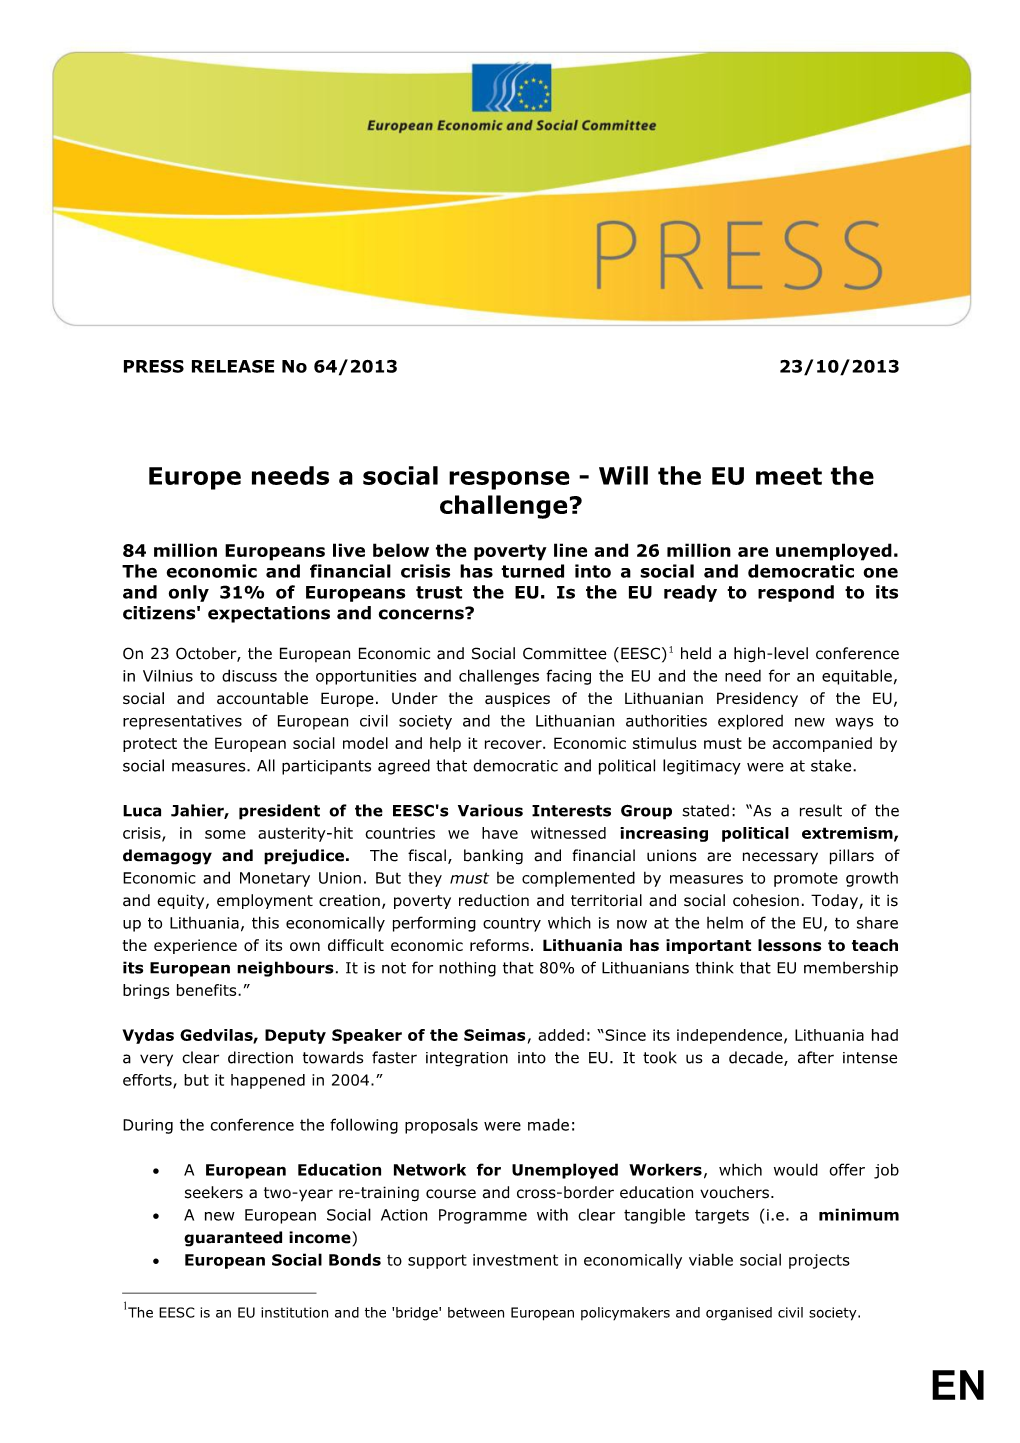 Europe Needs a Social Response - Will the EU Meet the Challenge?